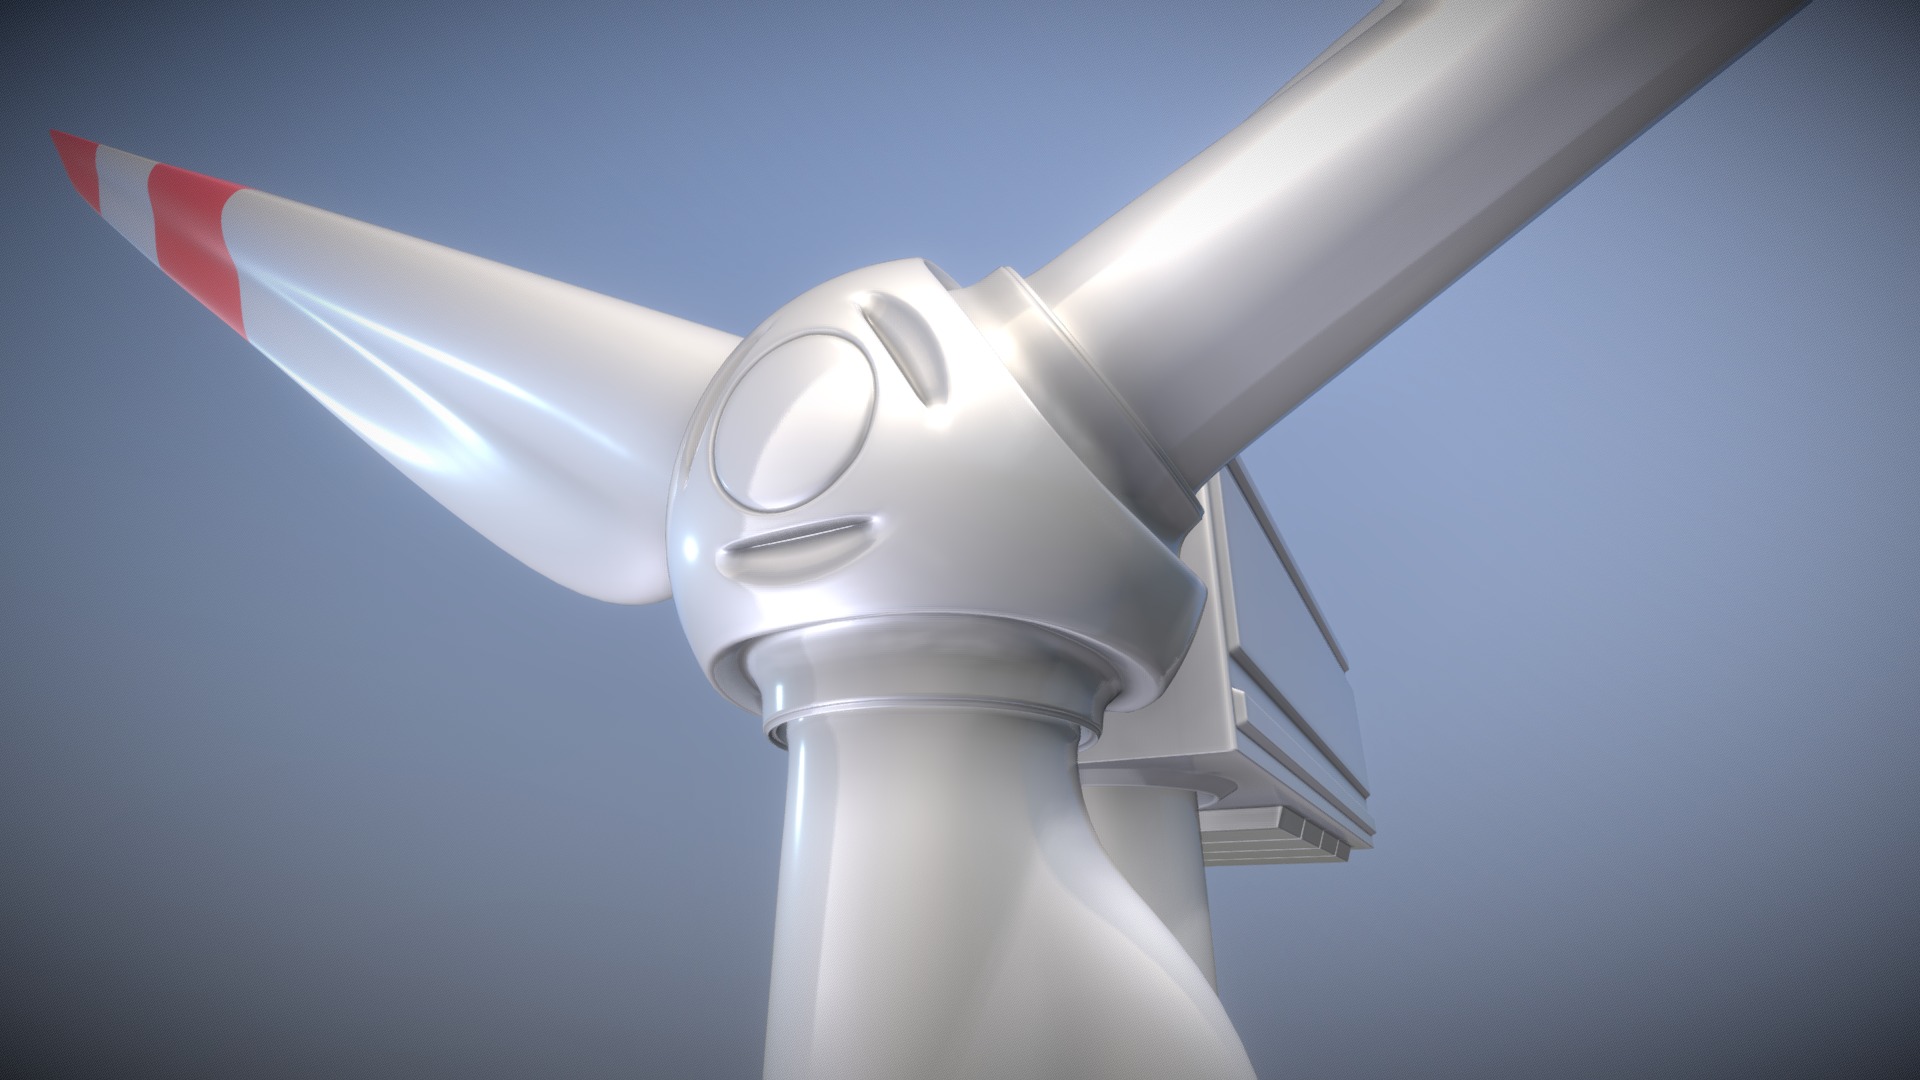 3D model Wind Turbin 2 – Animated / High-Poly Version - This is a 3D model of the Wind Turbin 2 - Animated / High-Poly Version. The 3D model is about a white ceiling fan.